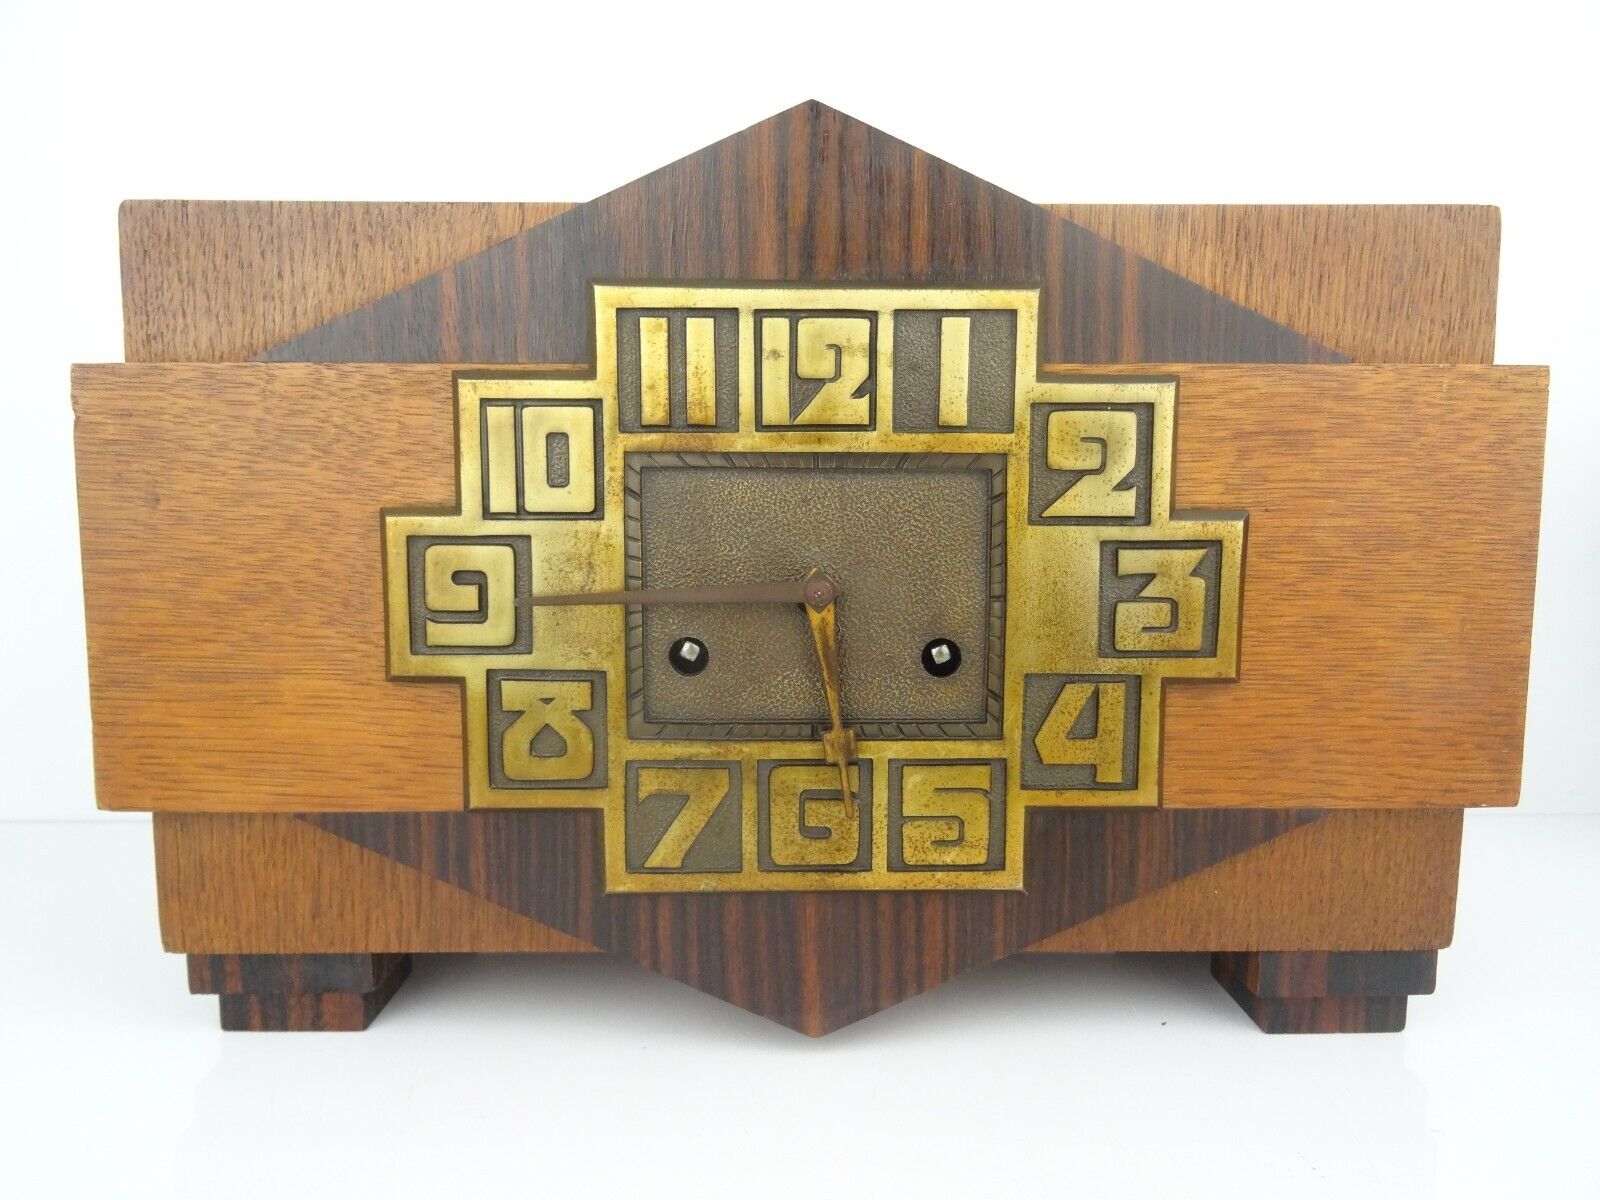 German JUNGHANS PFEILRKEUZ Bauhaus Antique 1930s Mantel Bracket Clock 8 Day